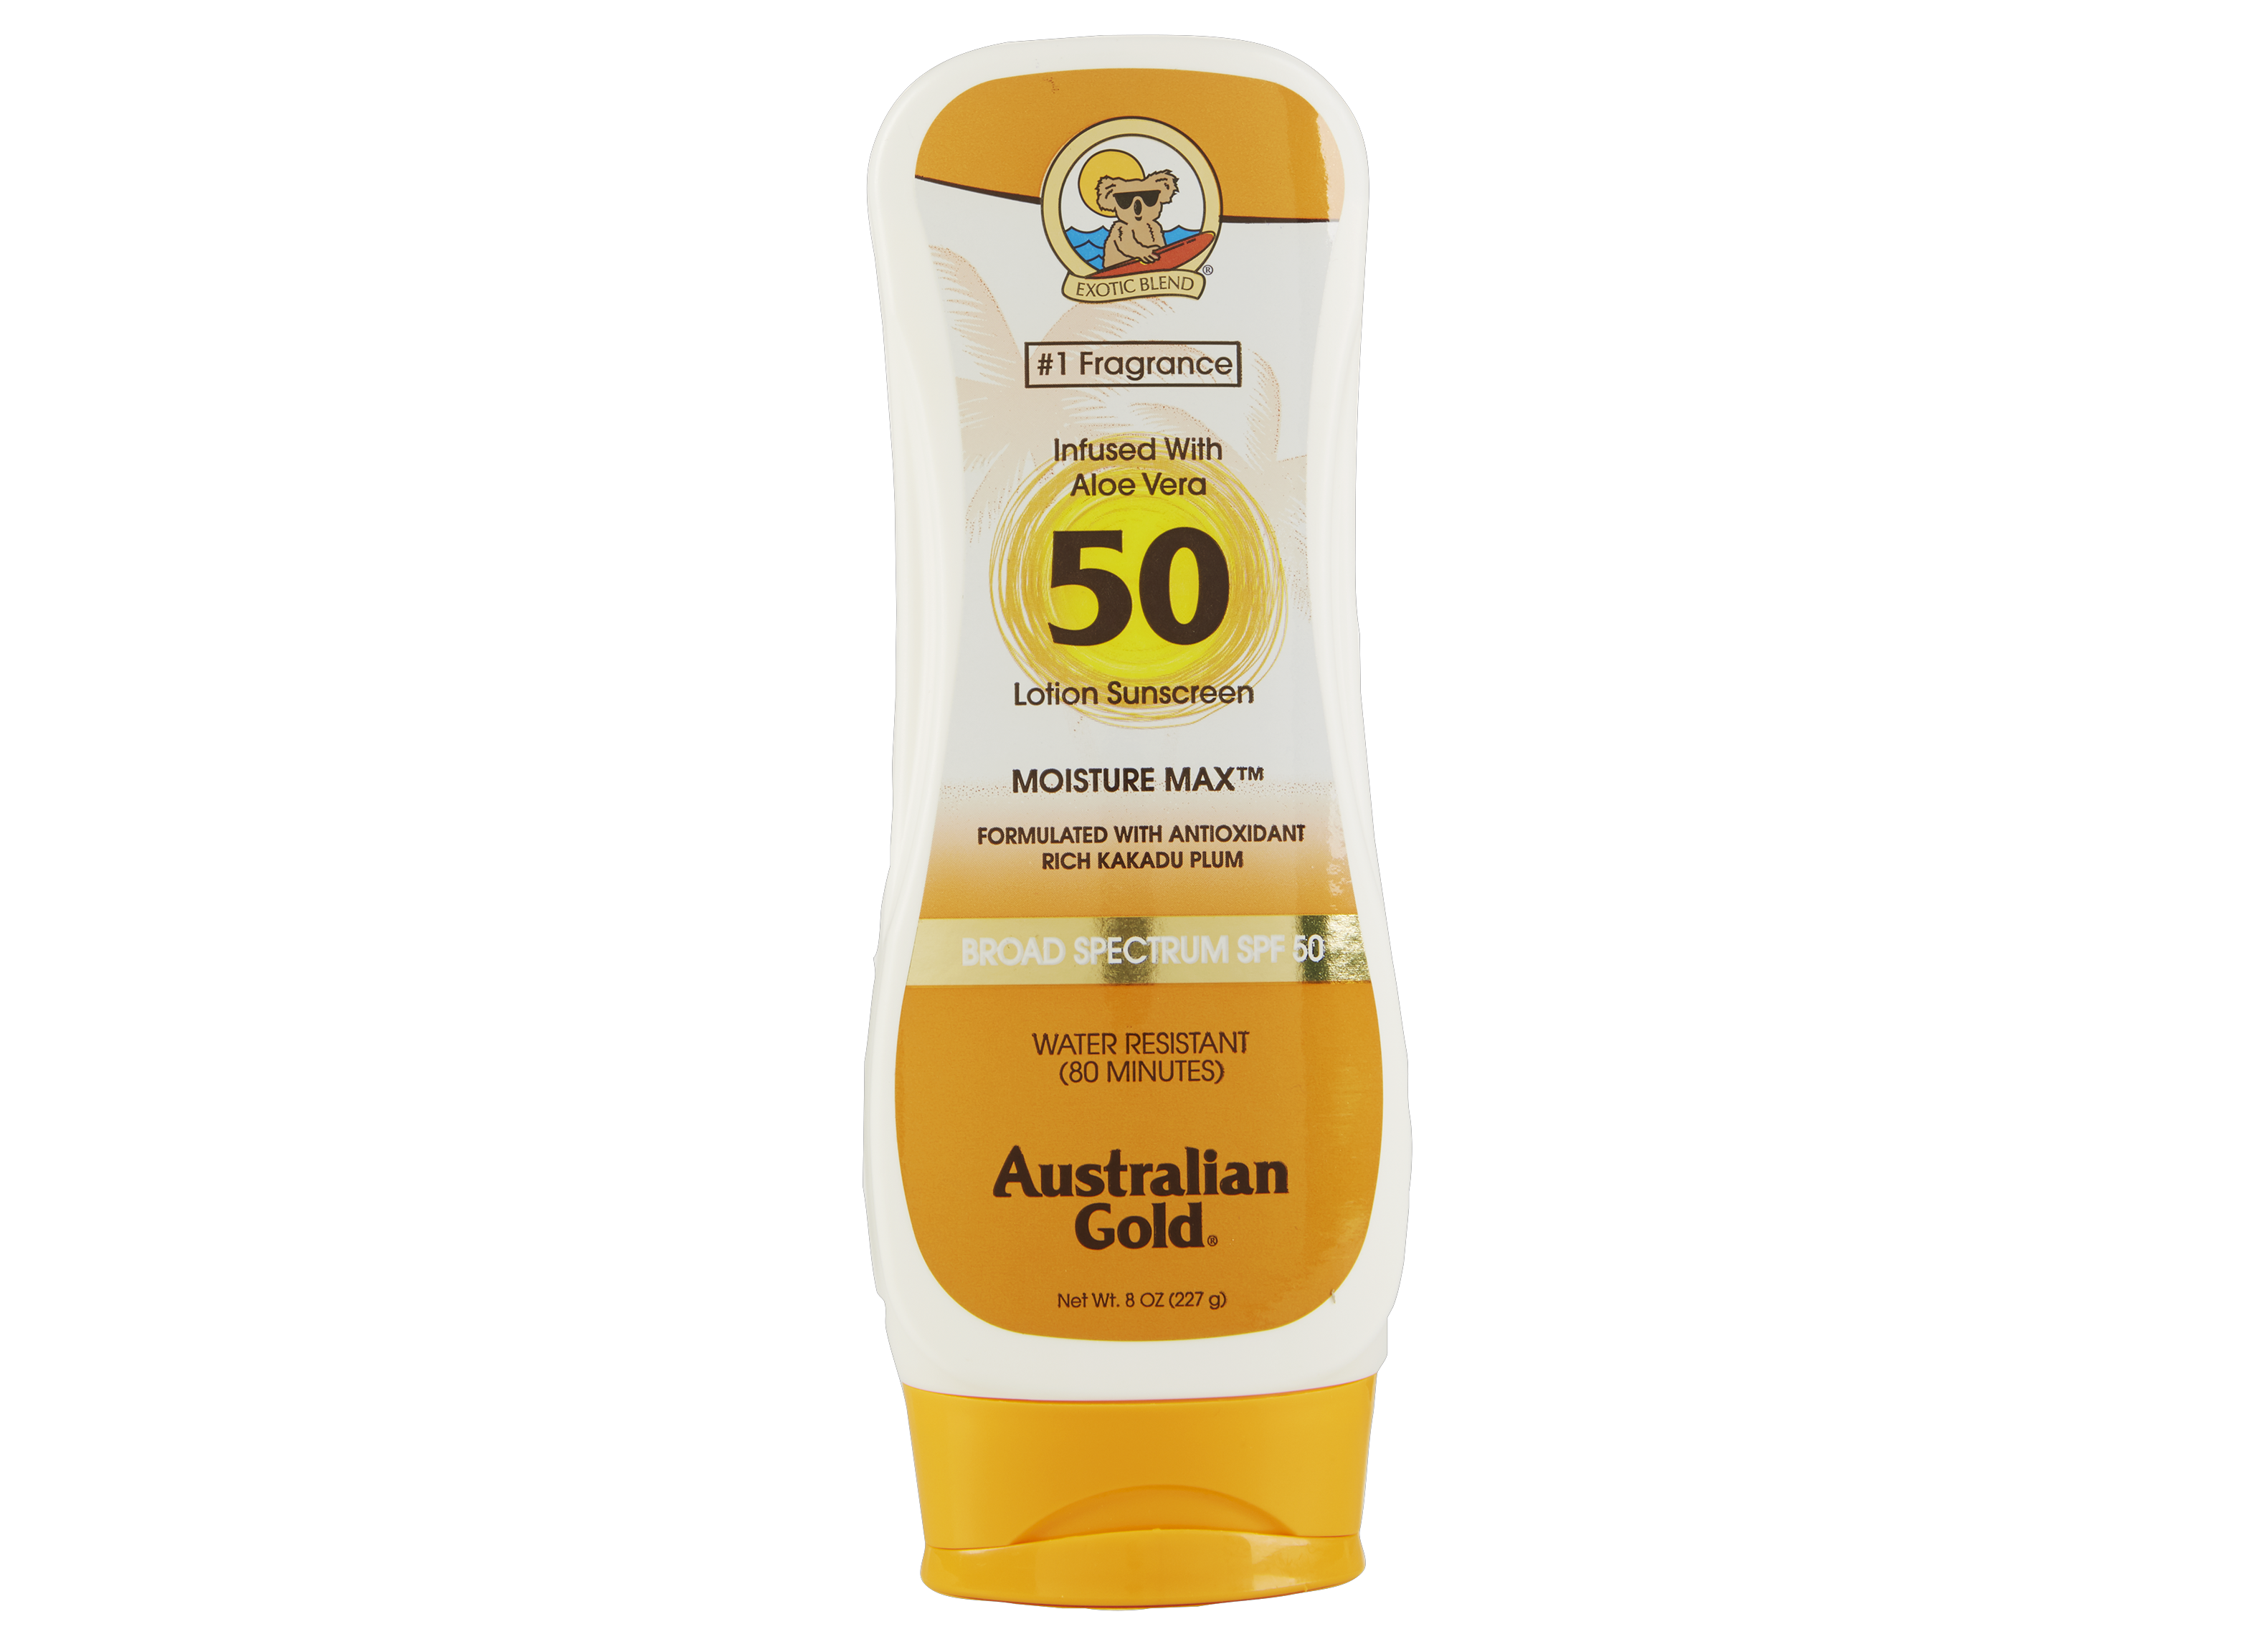 Australian Gold Sunscreen SPF 50 Sunscreen - Consumer Reports